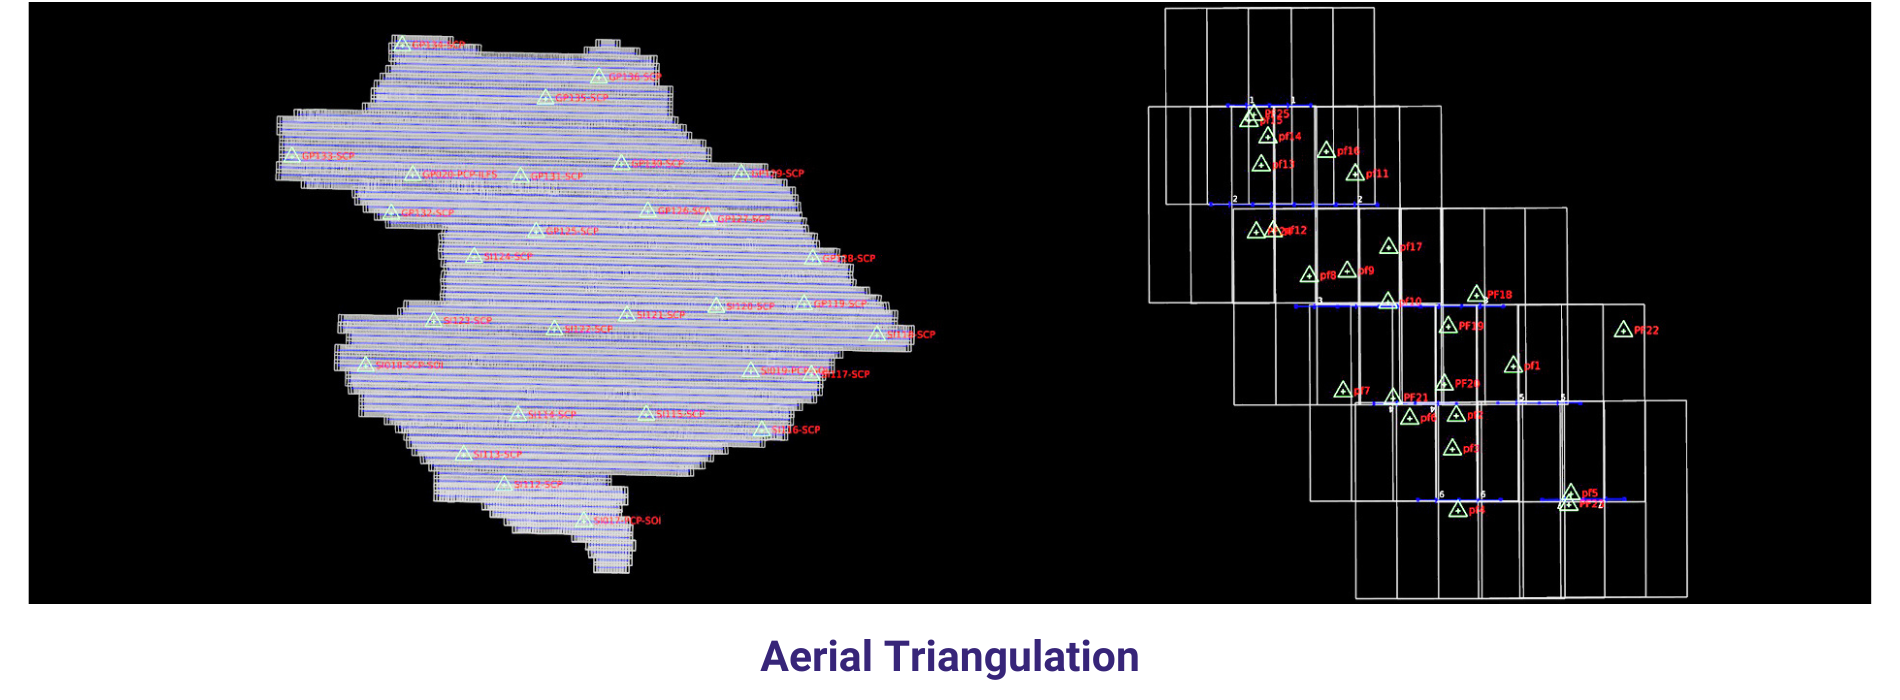 02 Aerial Triangulation